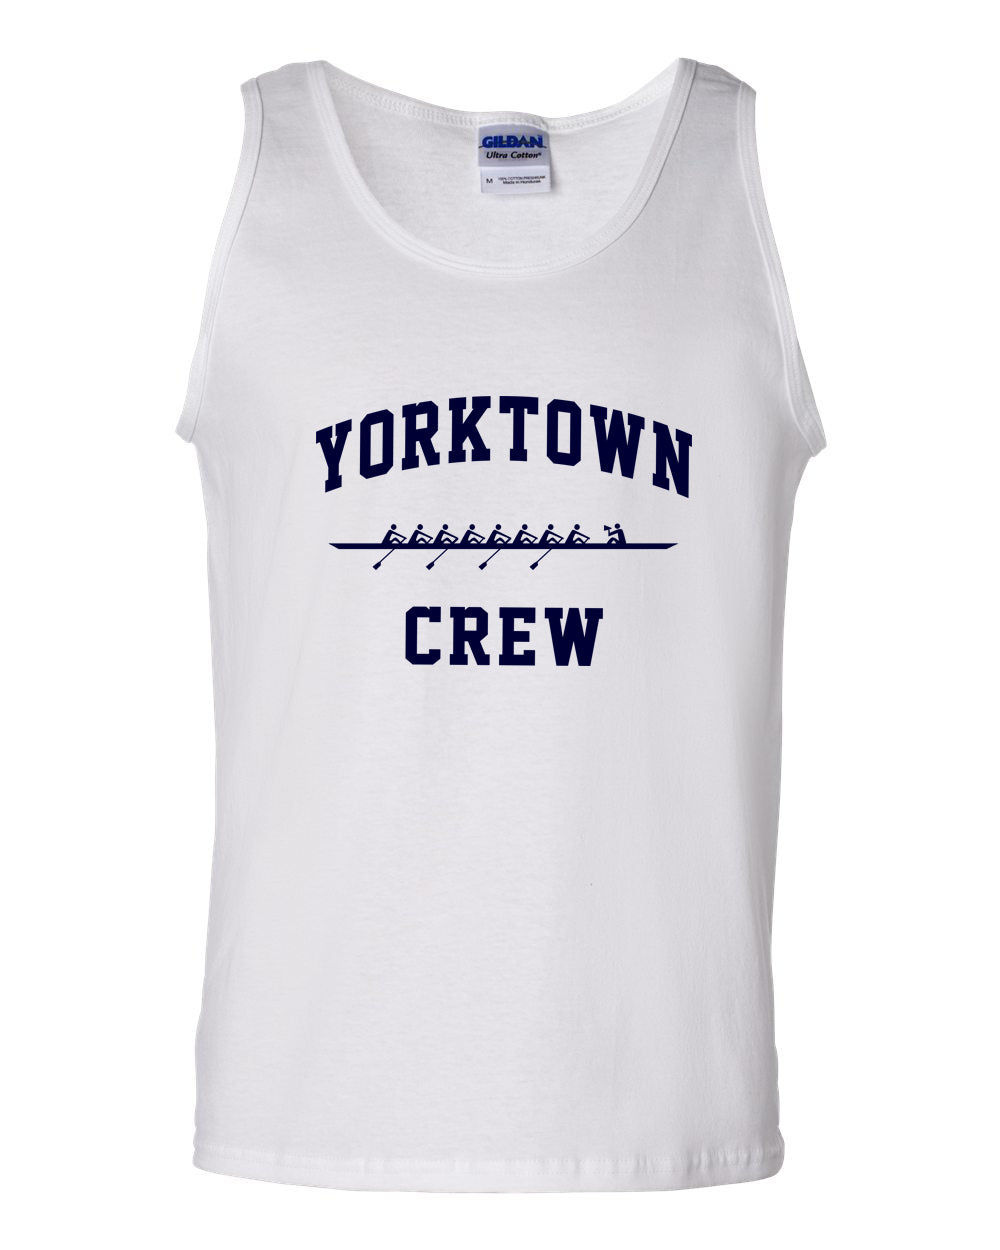 100% Cotton Yorktown Crew Tank Top